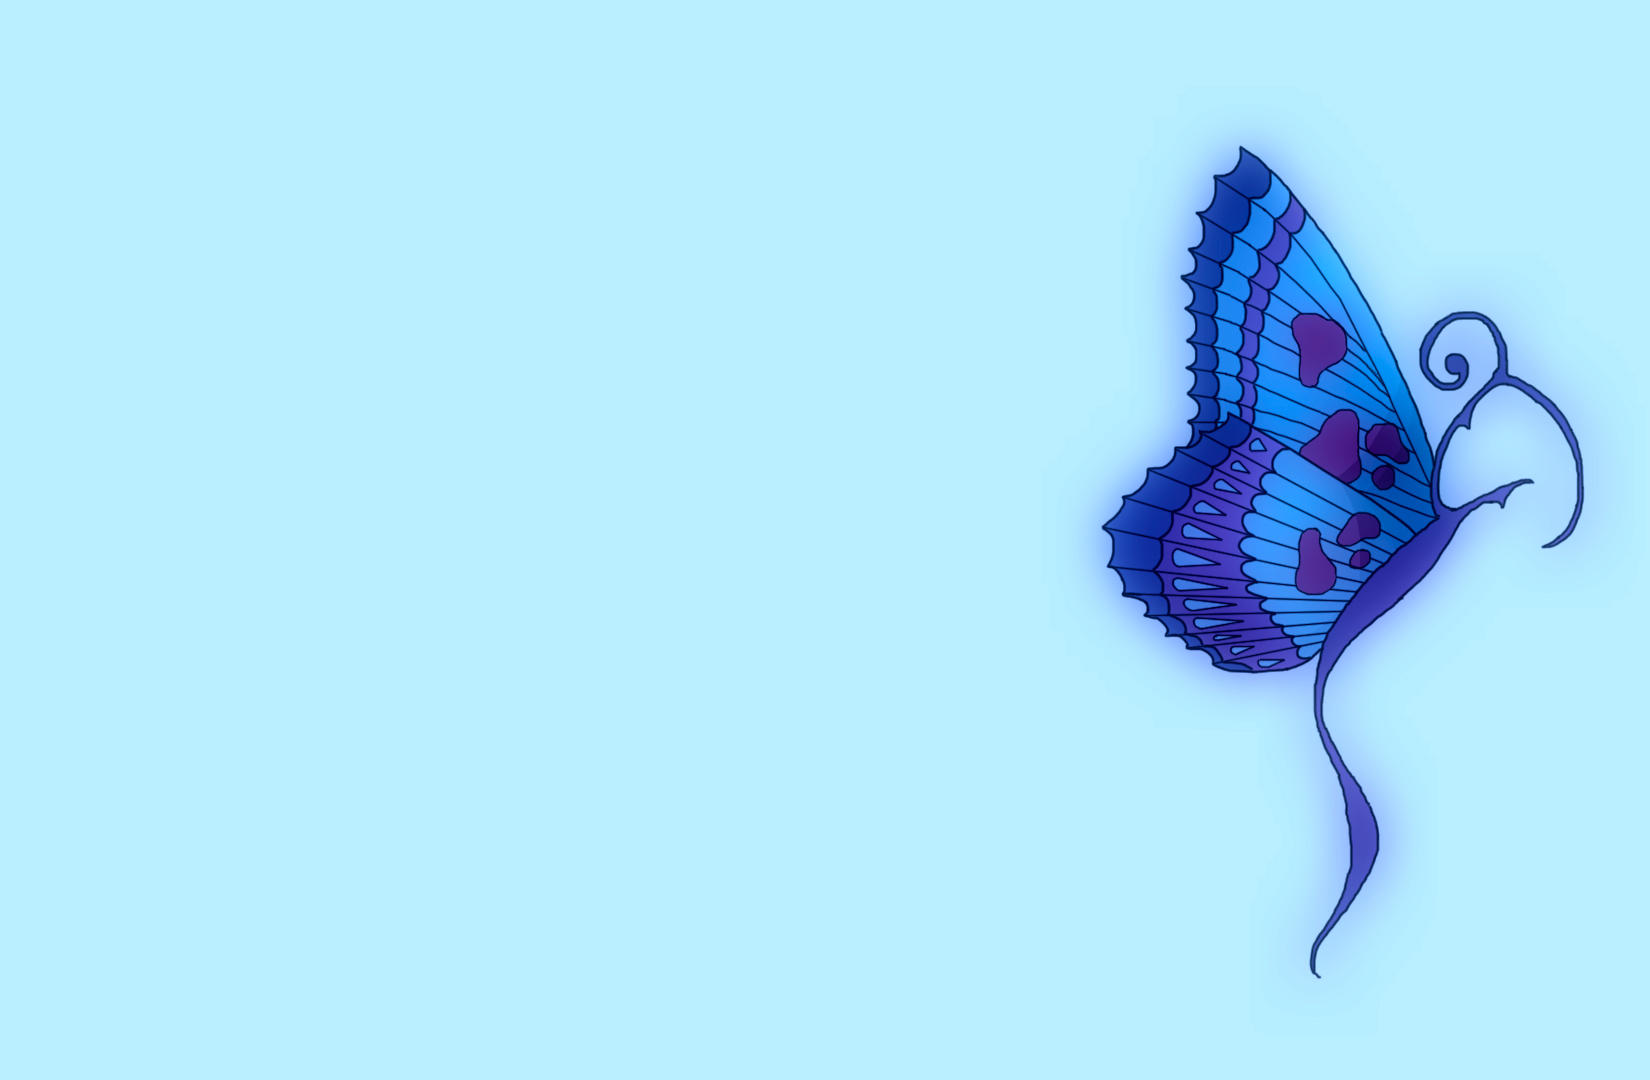 48+] Blue Butterfly Wallpaper Images - WallpaperSafari